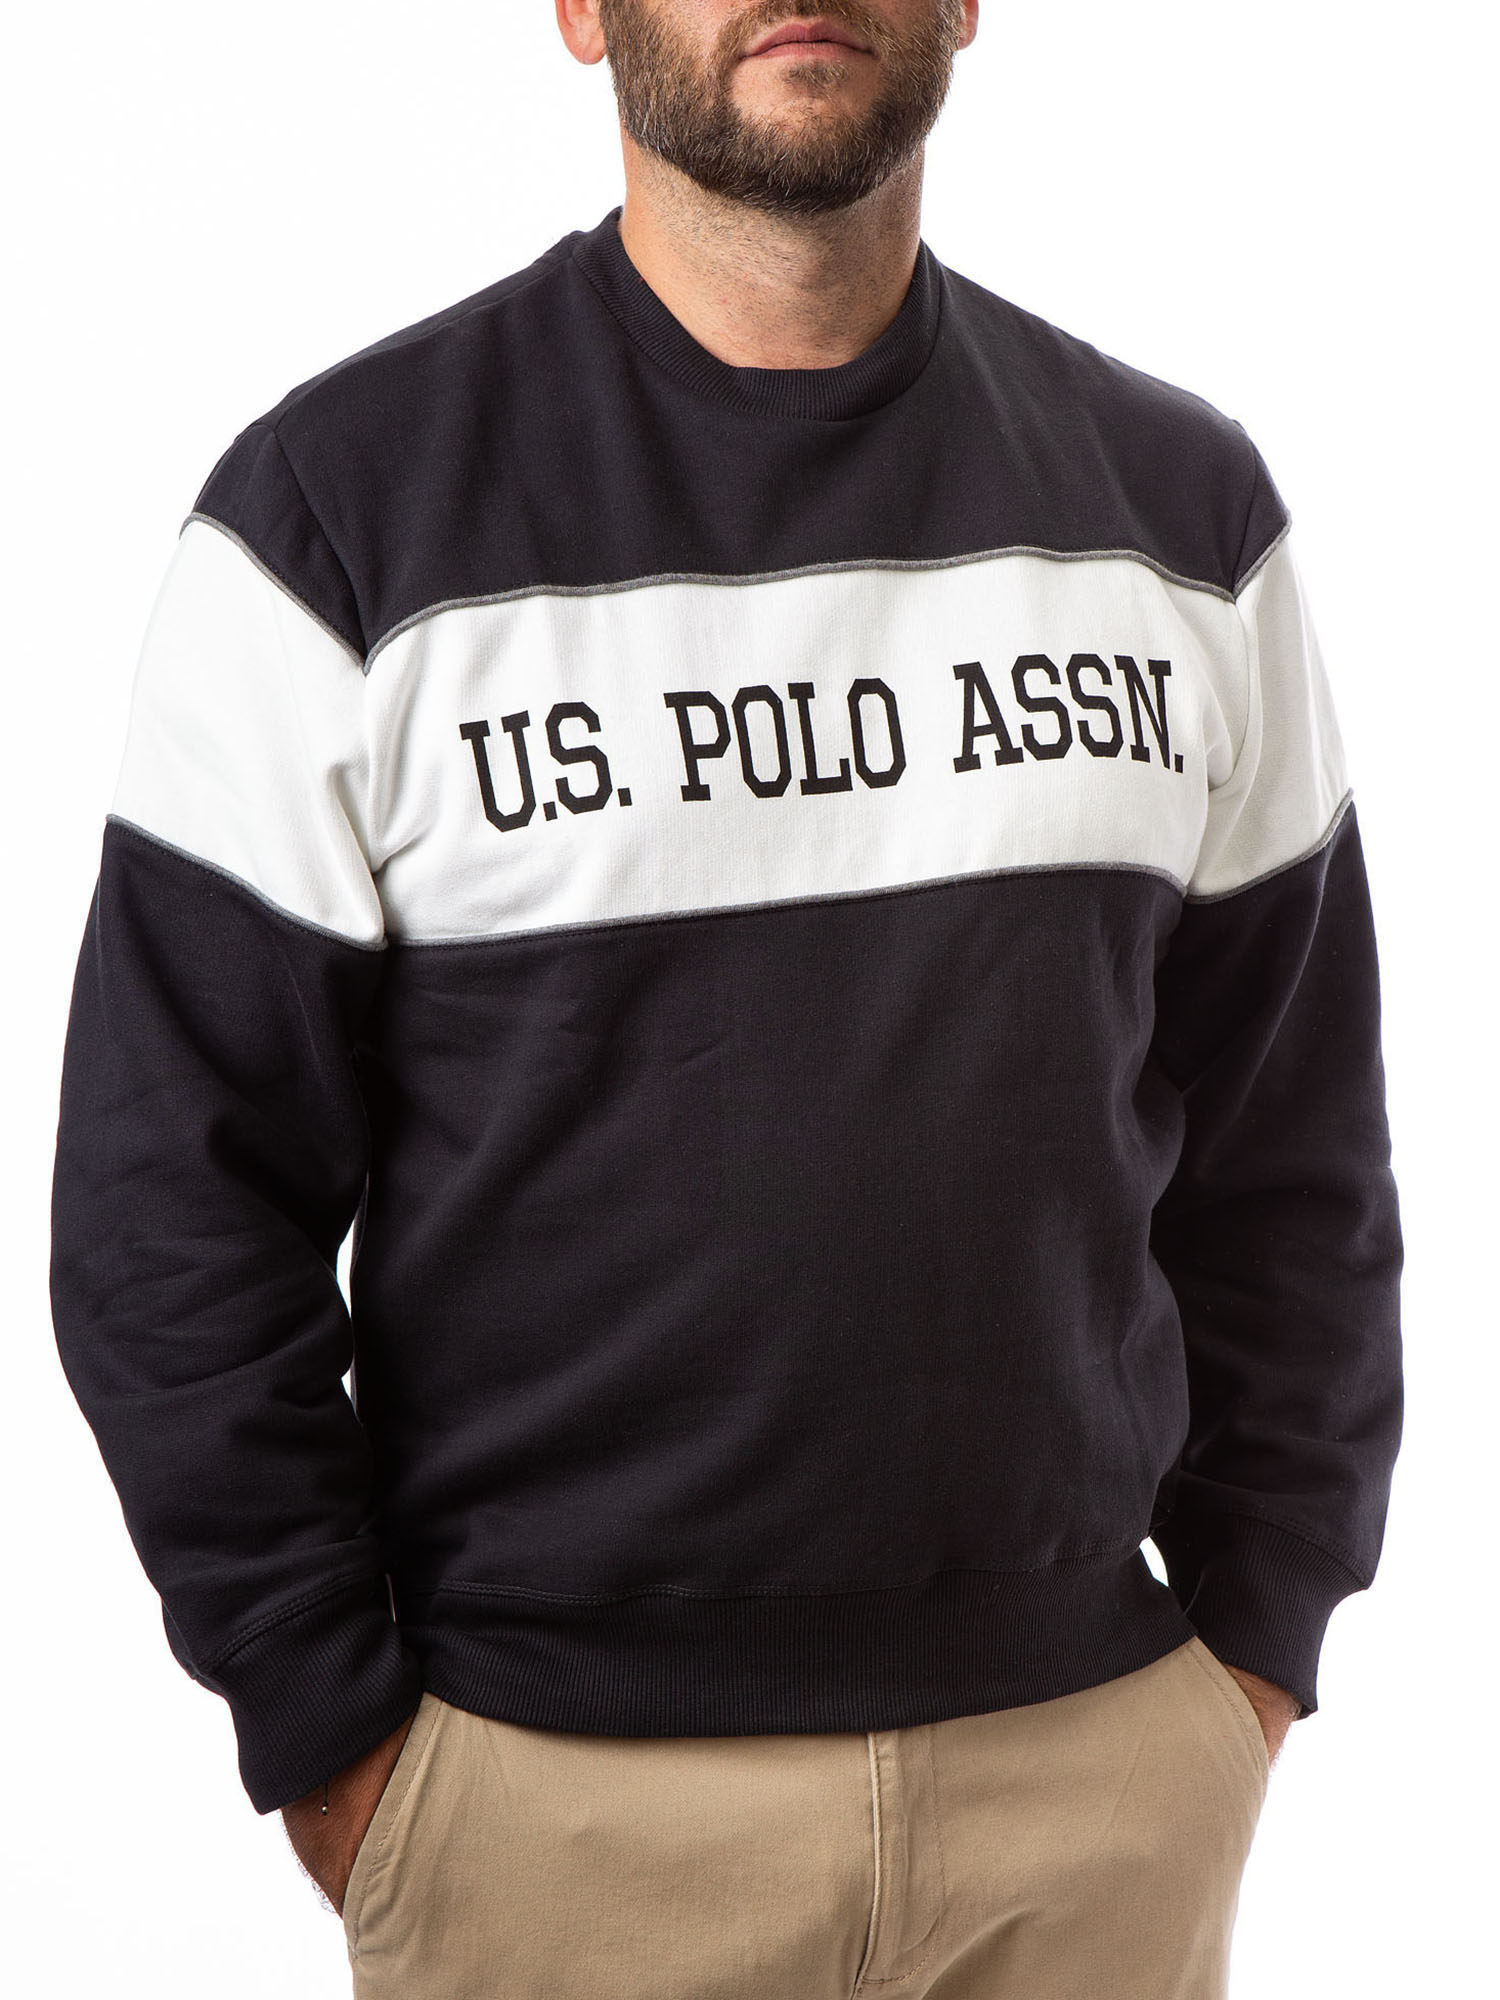 U.S. Polo Assn. Men's Colorblock Pullover - image 1 of 3